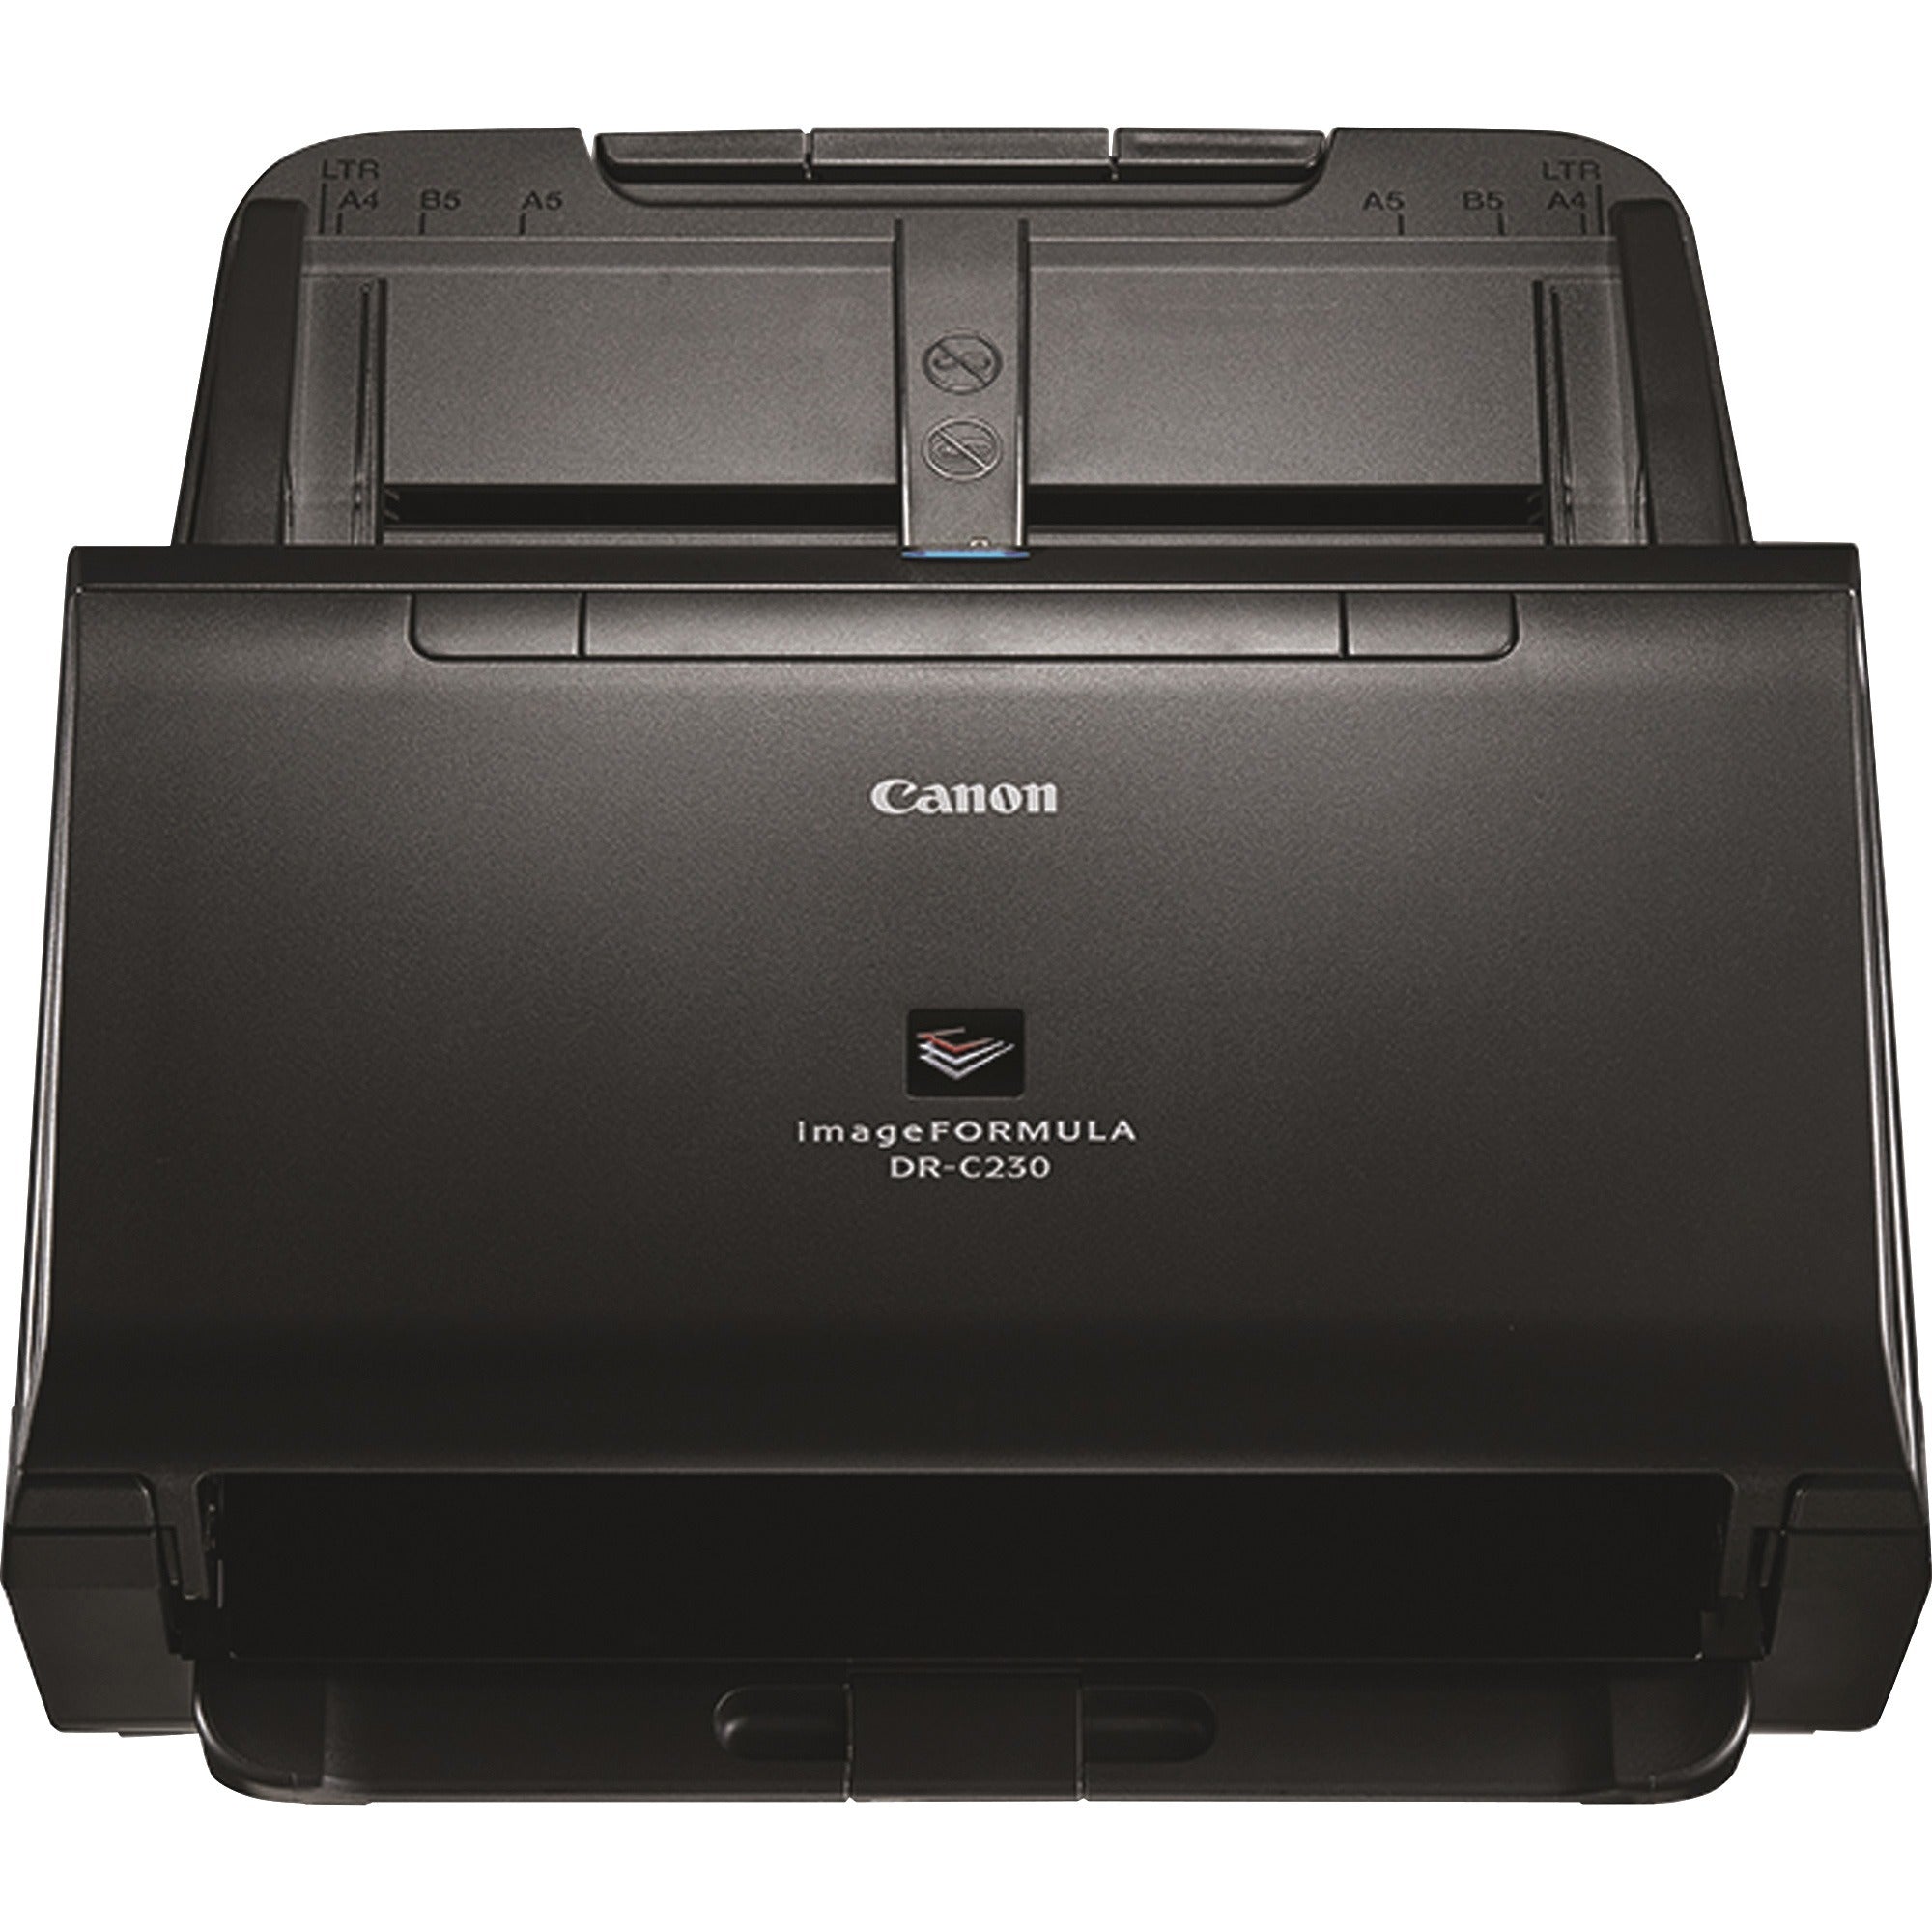 canon-imageformula-dr-c230-sheetfed-scanner-600-dpi-optical-24-bit-color-8-bit-grayscale-30-ppm-mono-30-ppm-color-duplex-scanning_cnmdrc230 - 2